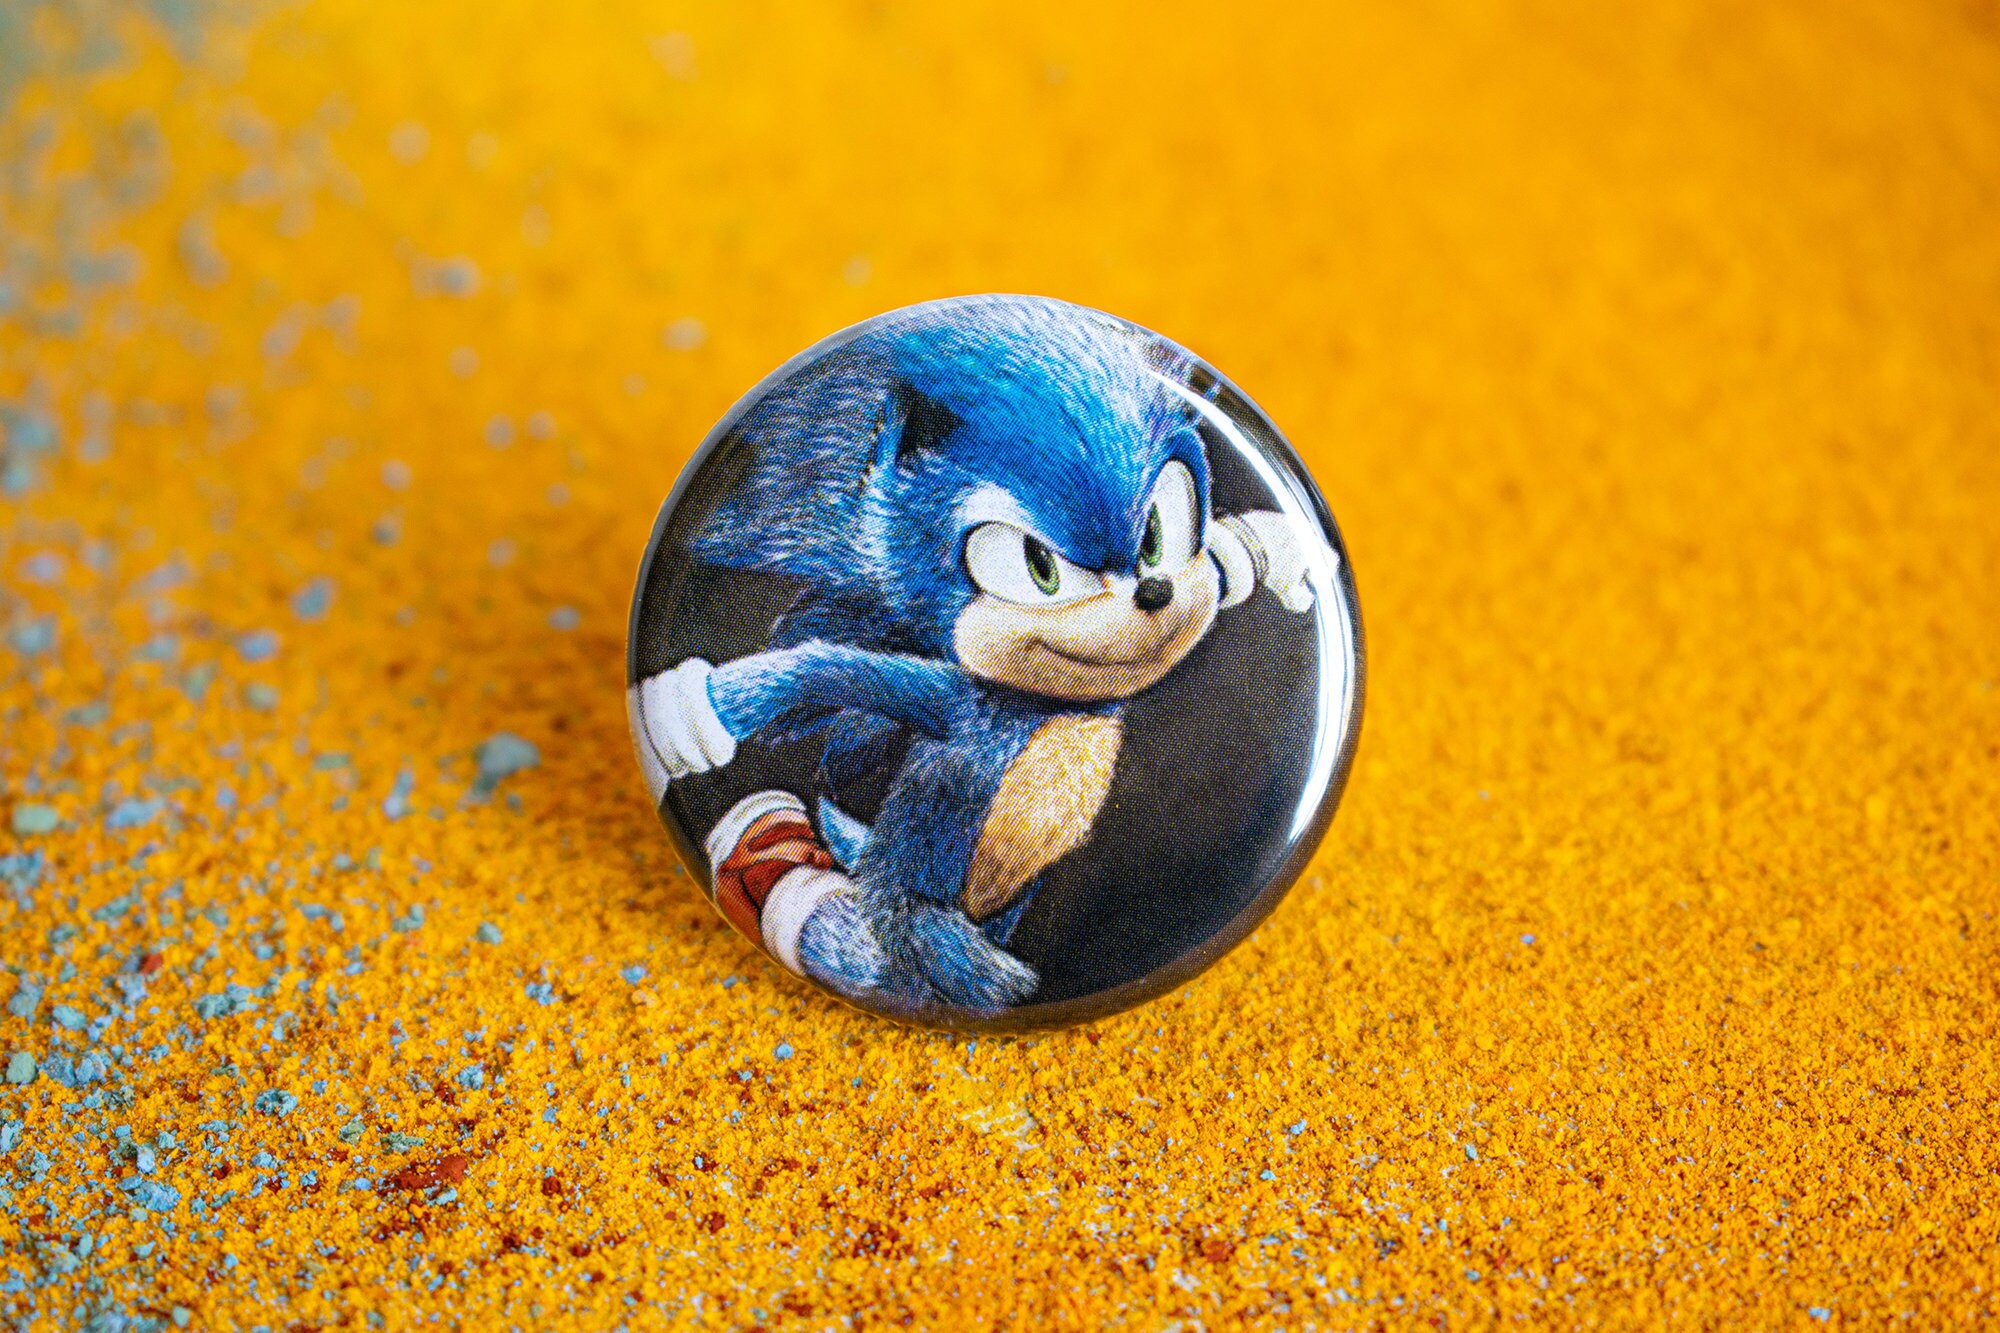 Sonic - Sonic Amarelo 4 PNG Imagens e Moldes.com.br